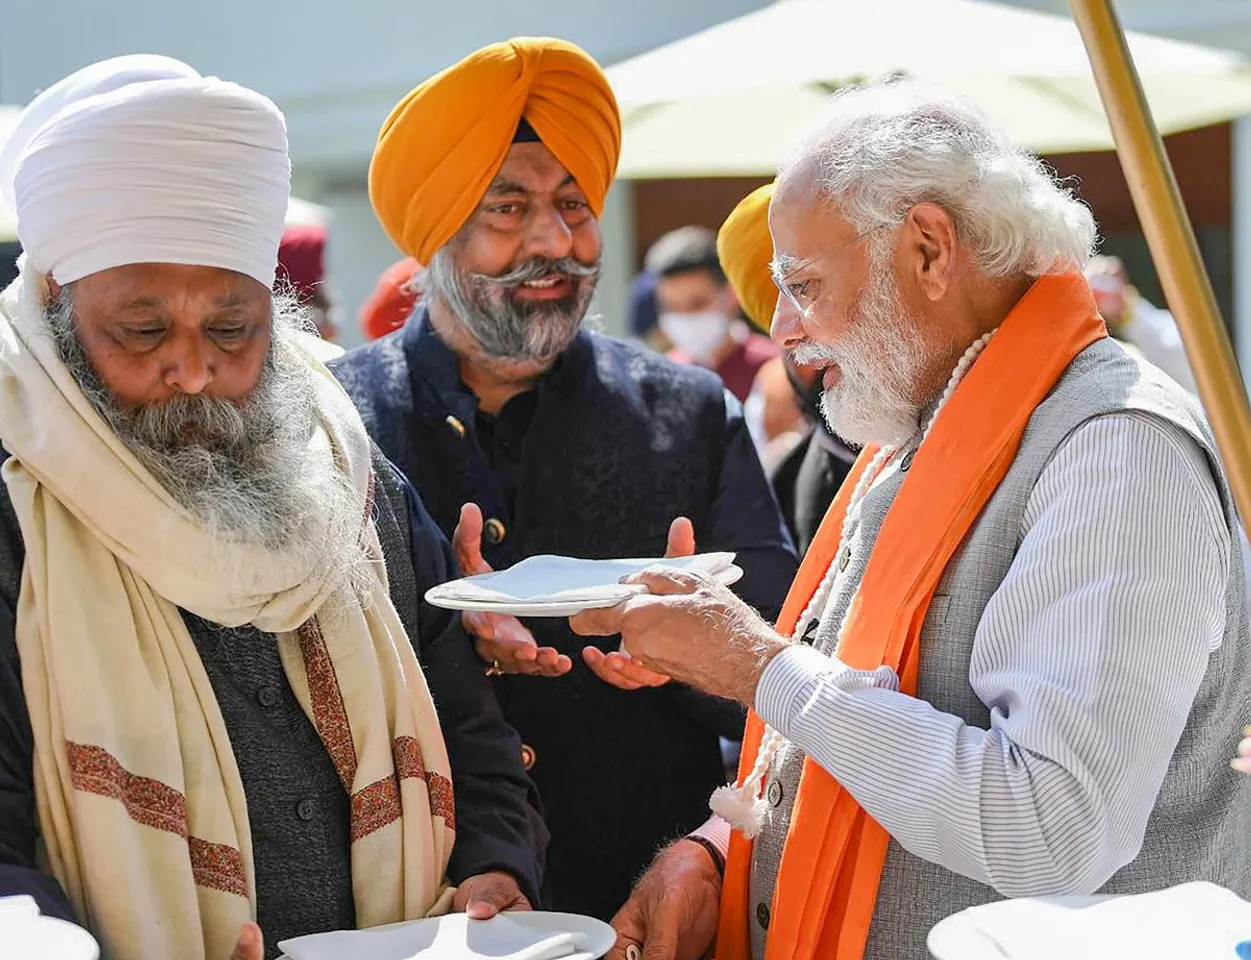 PM Modi instrumental in fulfilling demands of Sikhs, says Sikh American leader